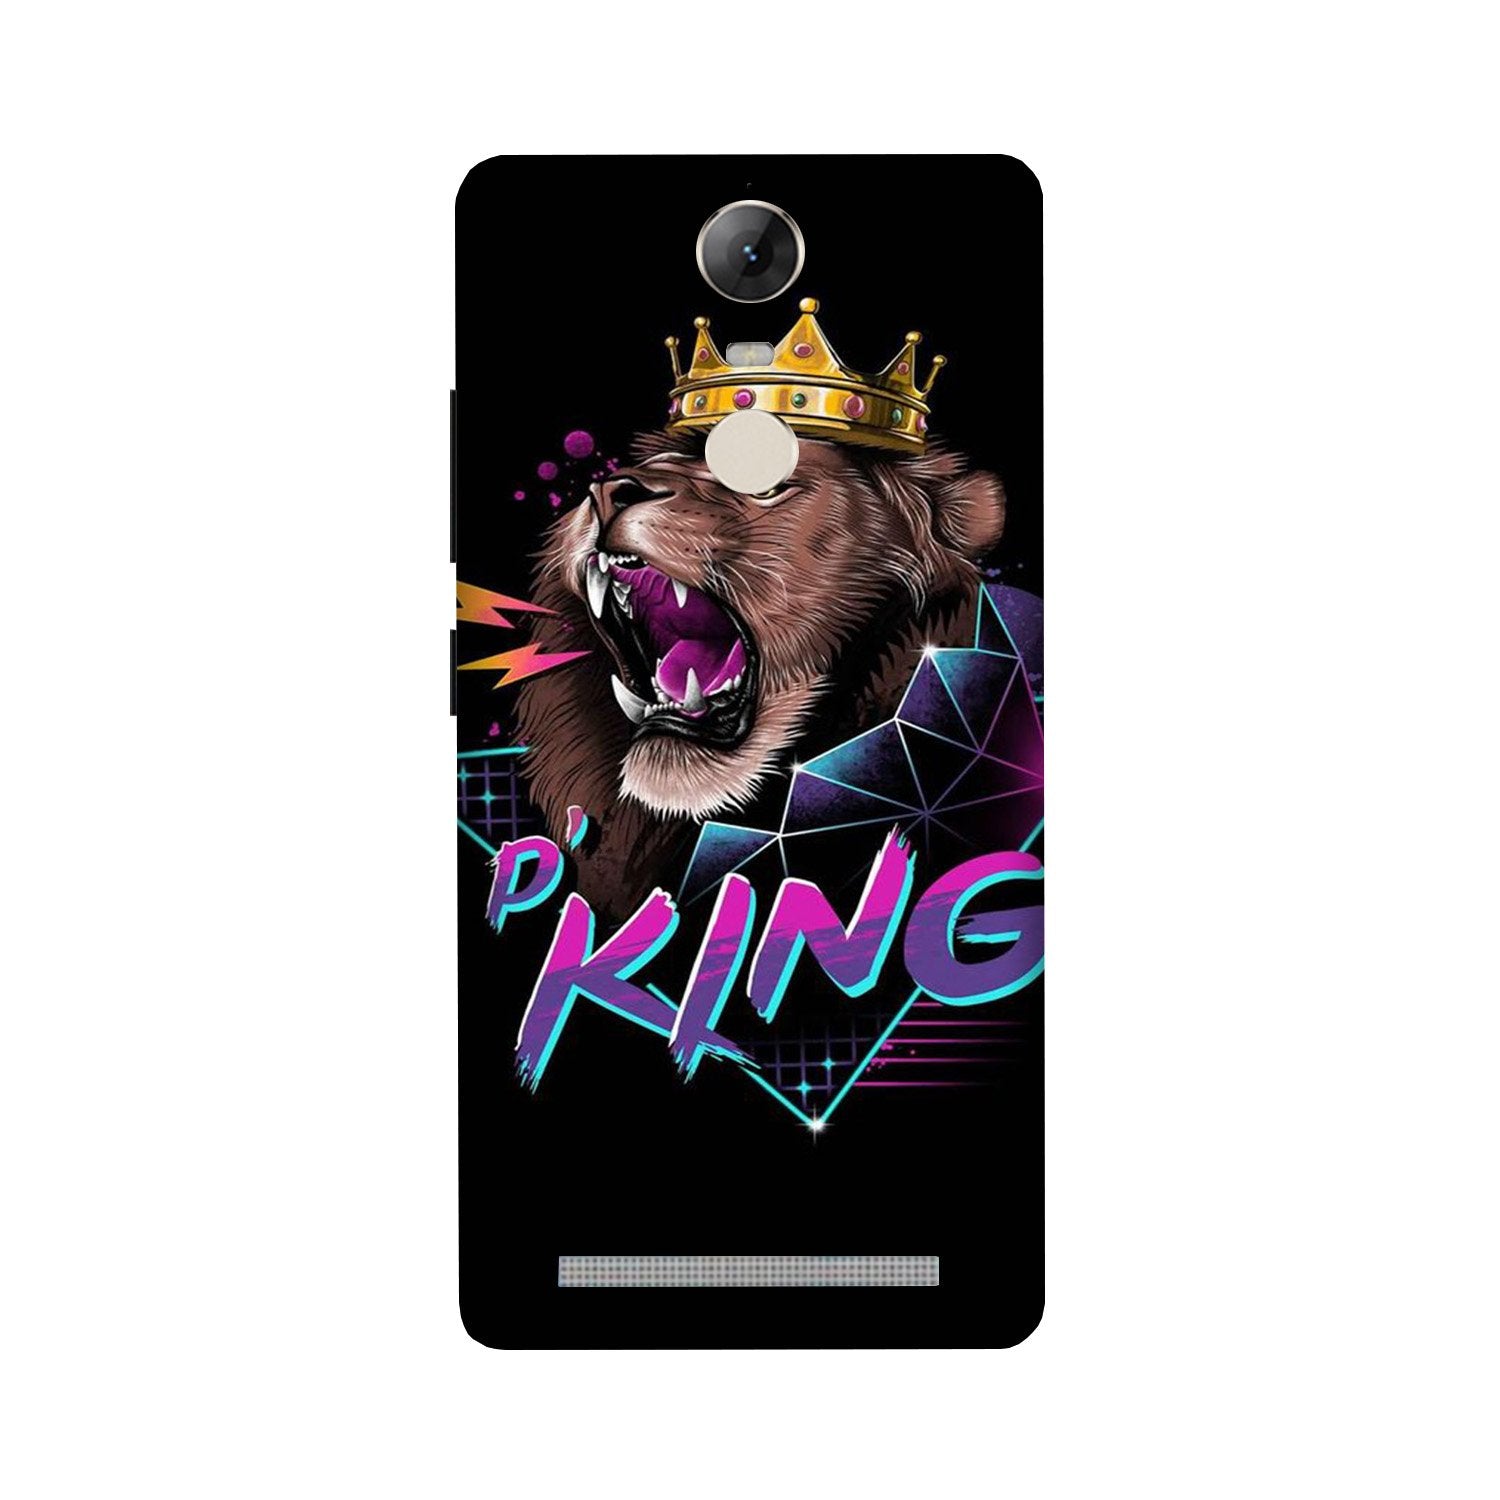 Lion King Case for Lenovo Vibe K5 Note (Design No. 219)